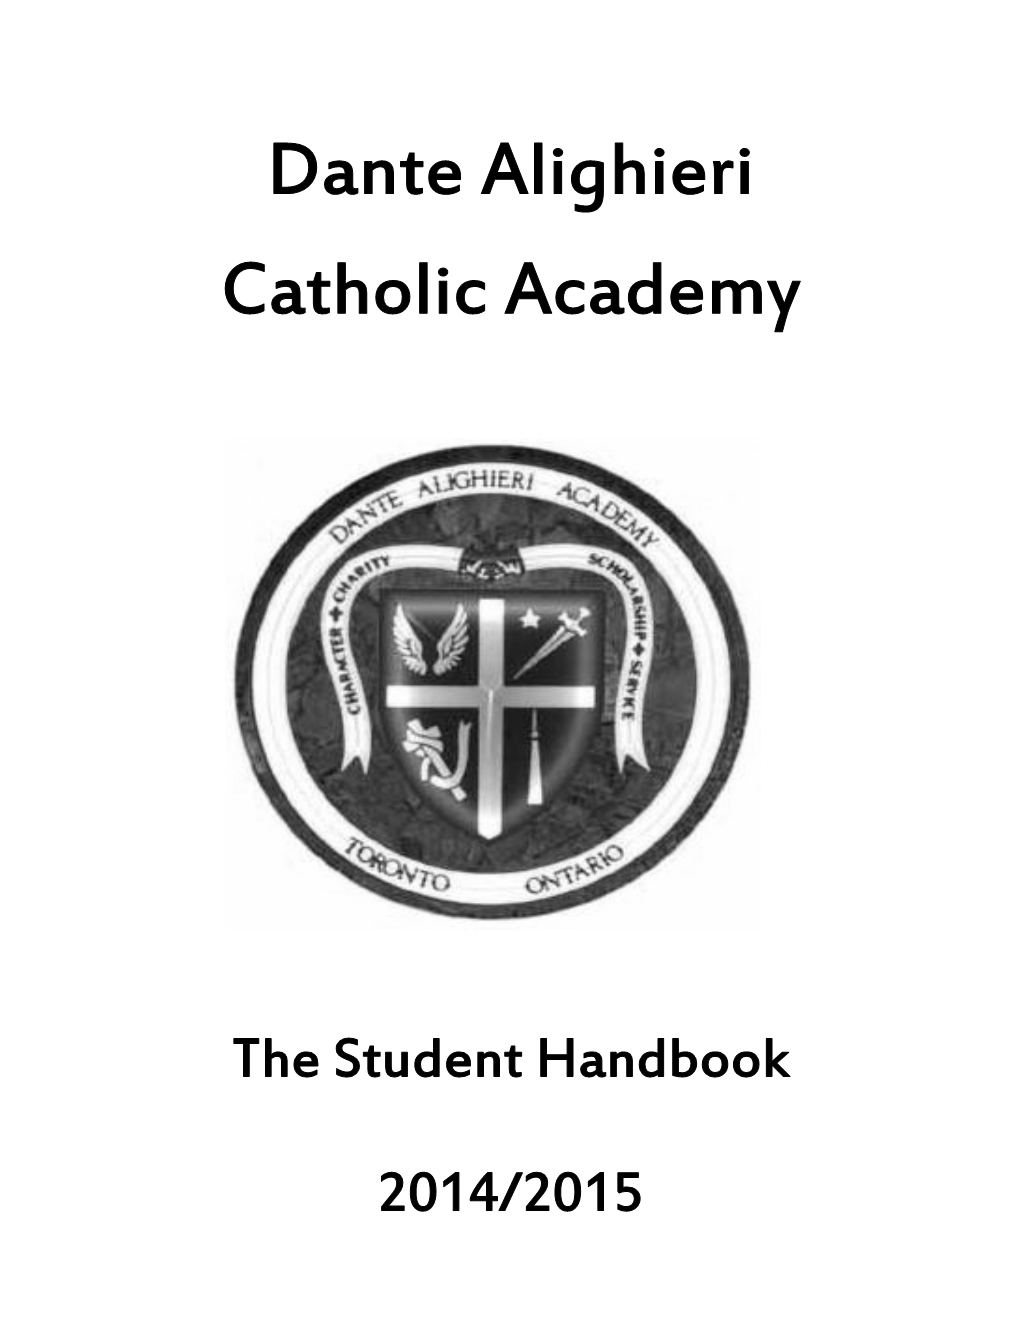 Dante Alighieri Catholic Academy